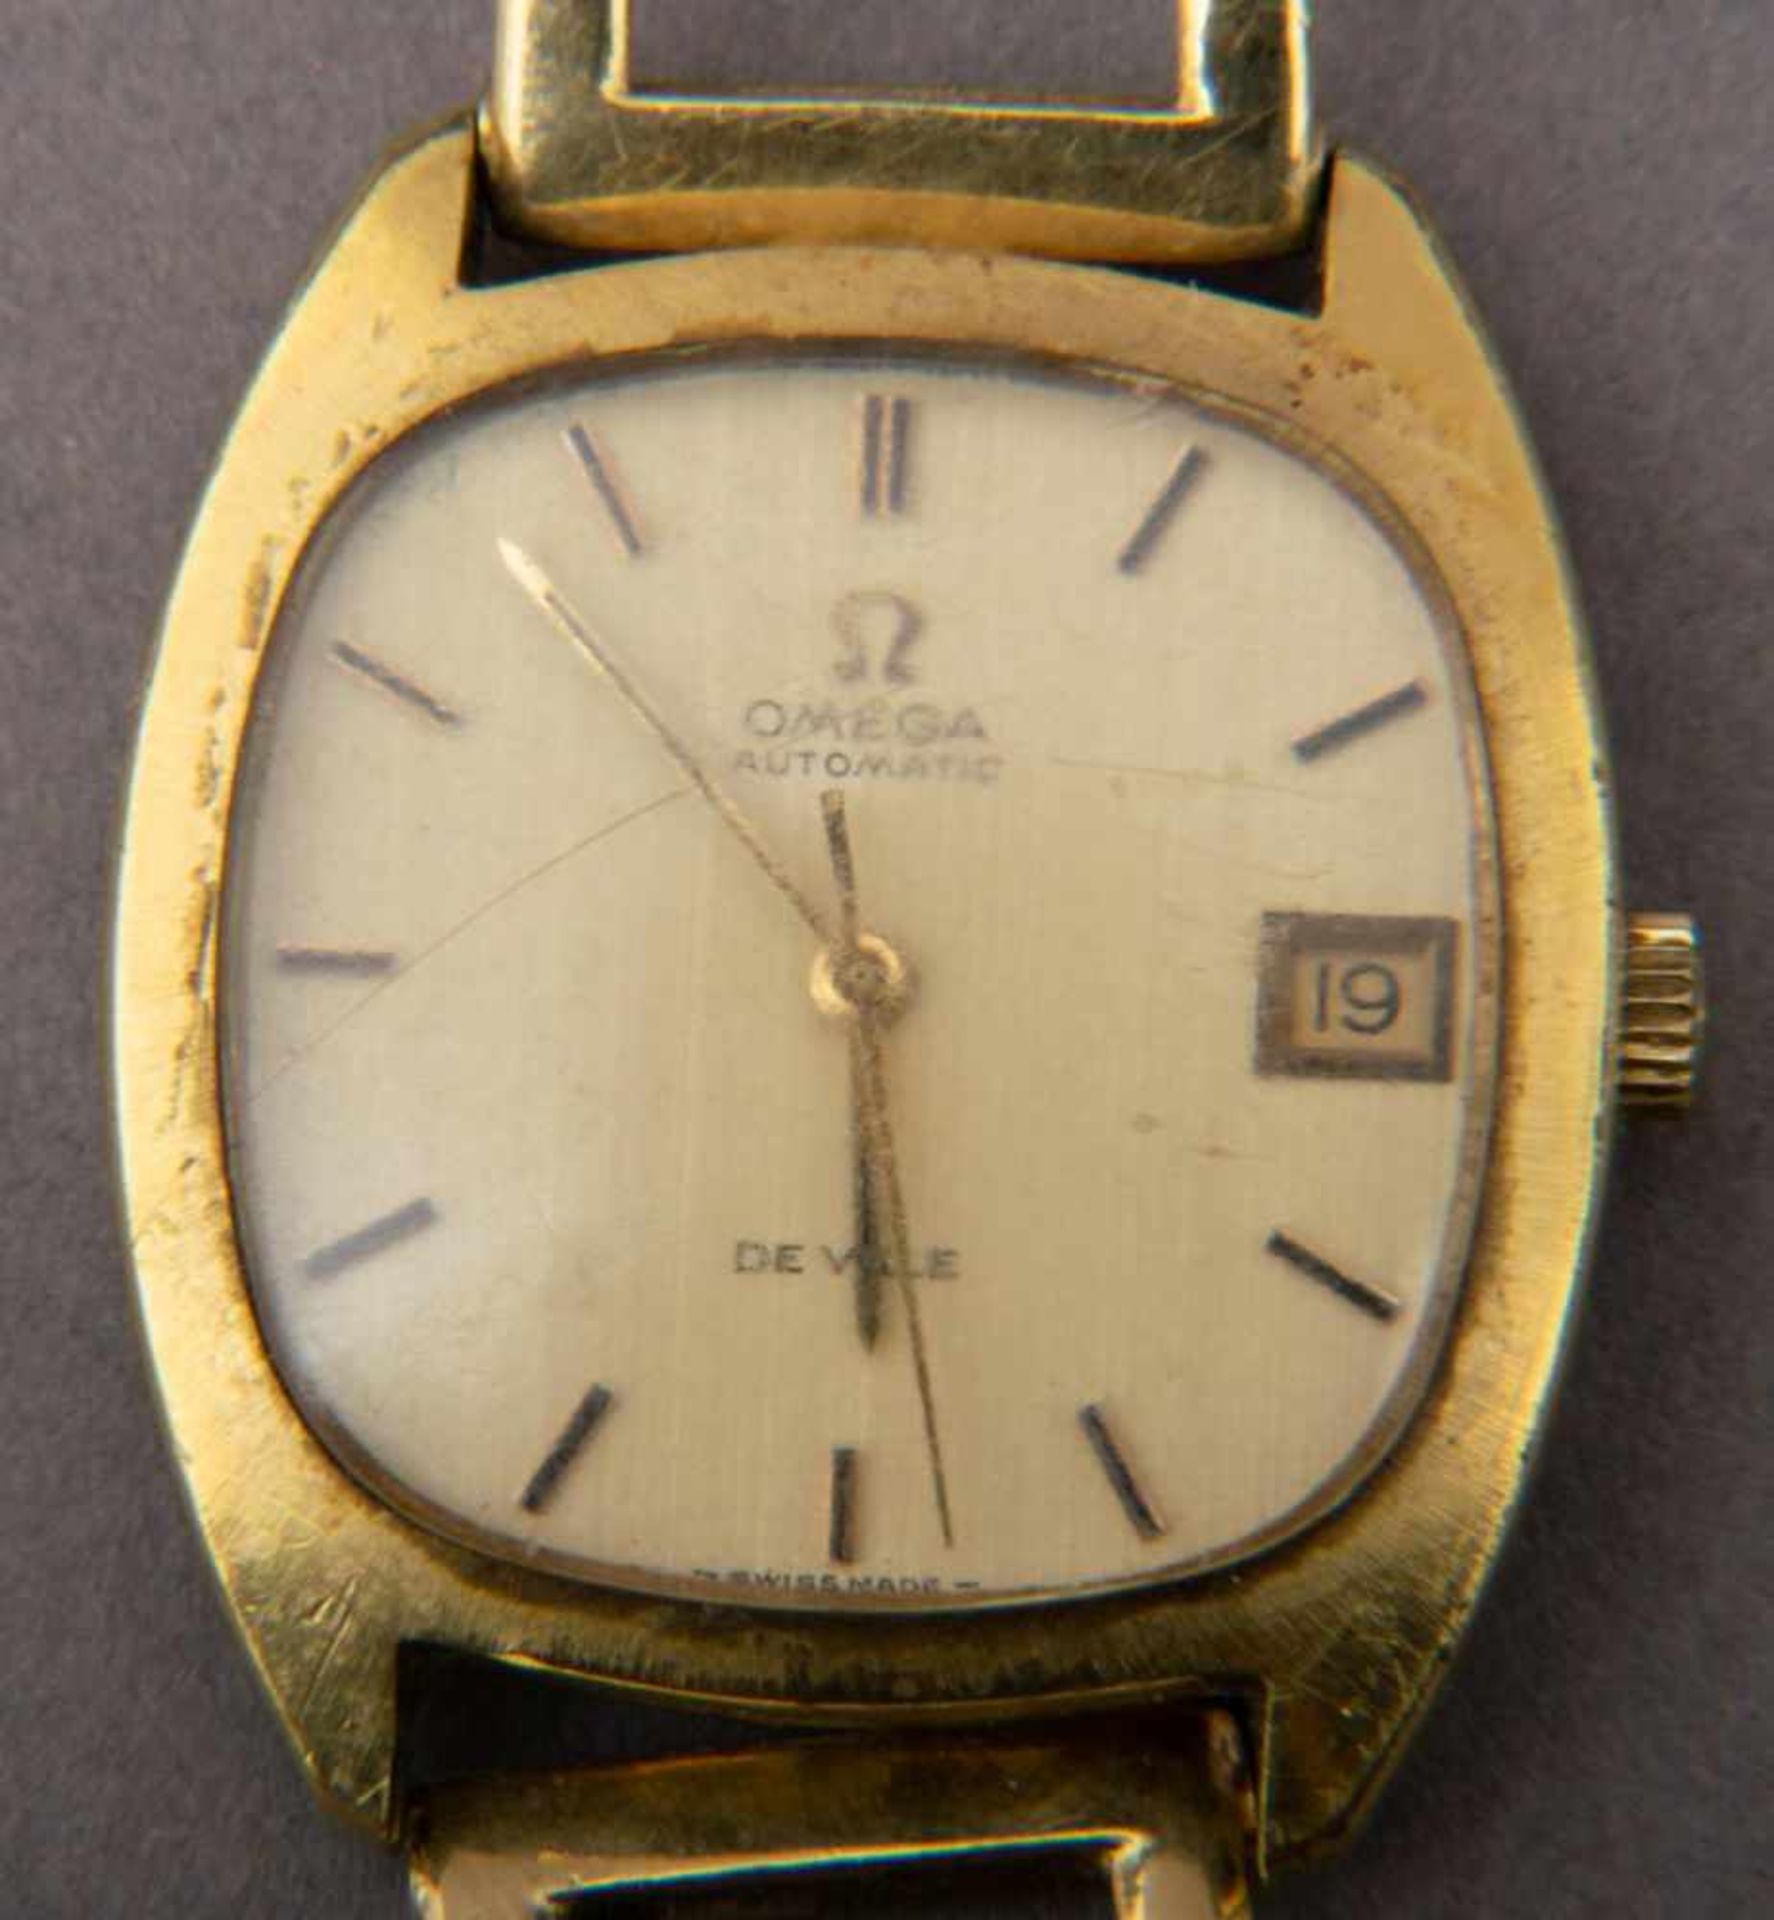 Omega De Ville Herrenarmbanduhr mit 585er Gelbgold-Armband (ca. 20 gr). Handaufzug mit